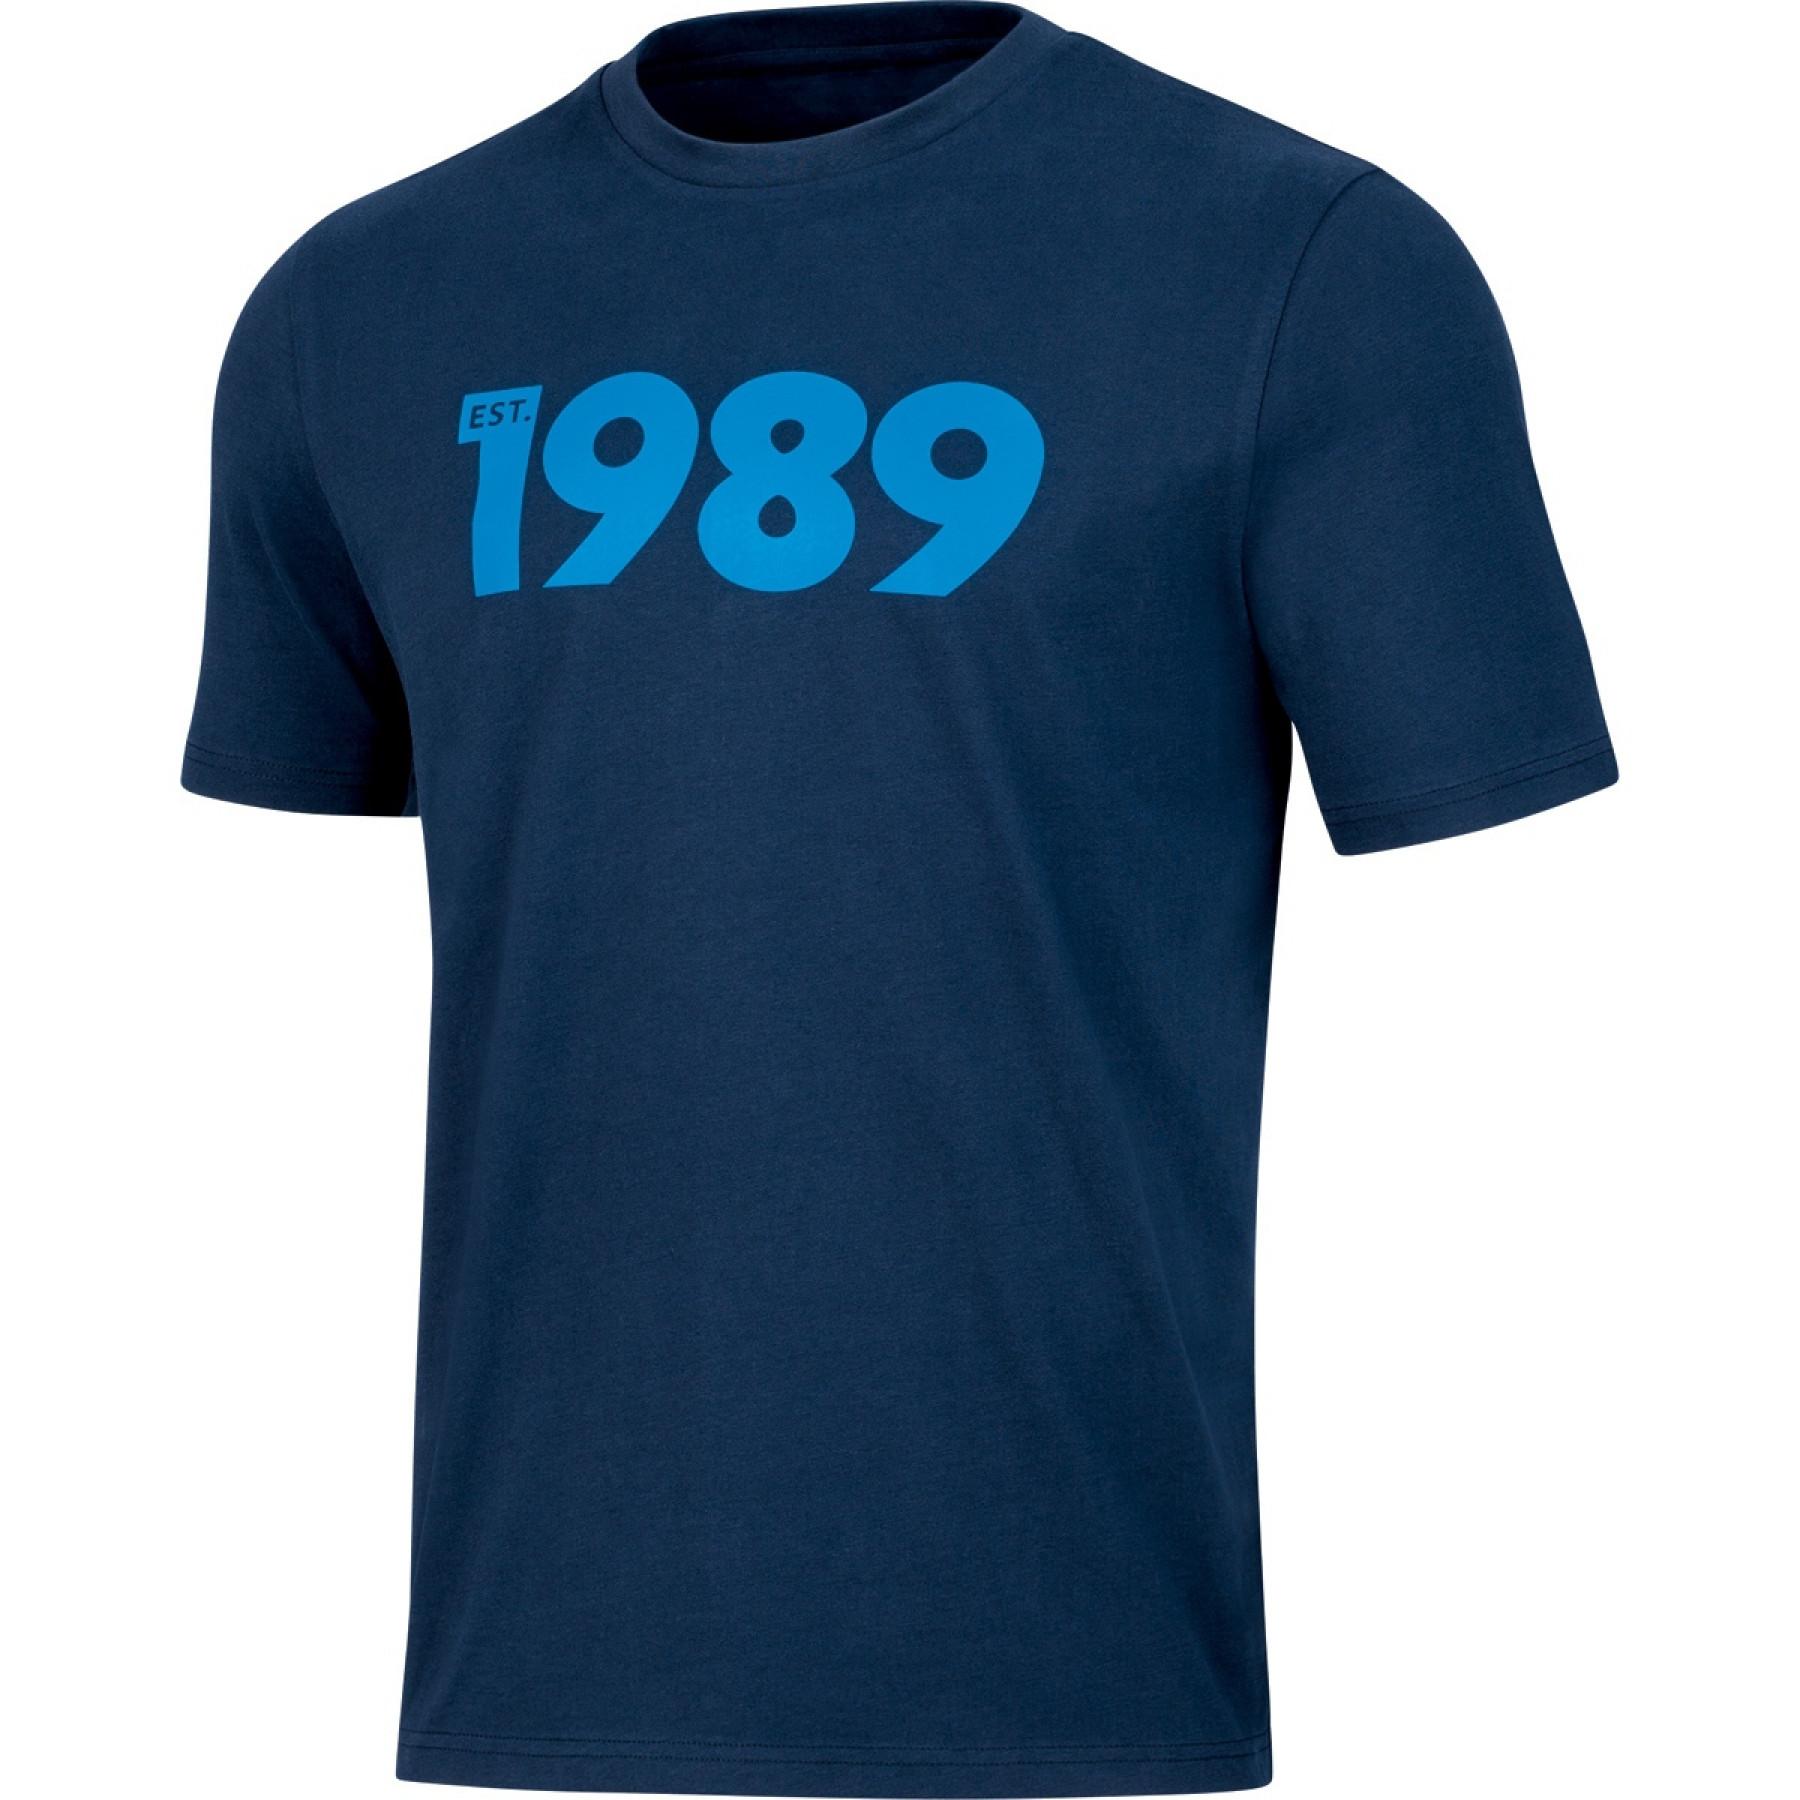 Camiseta Jako 1989